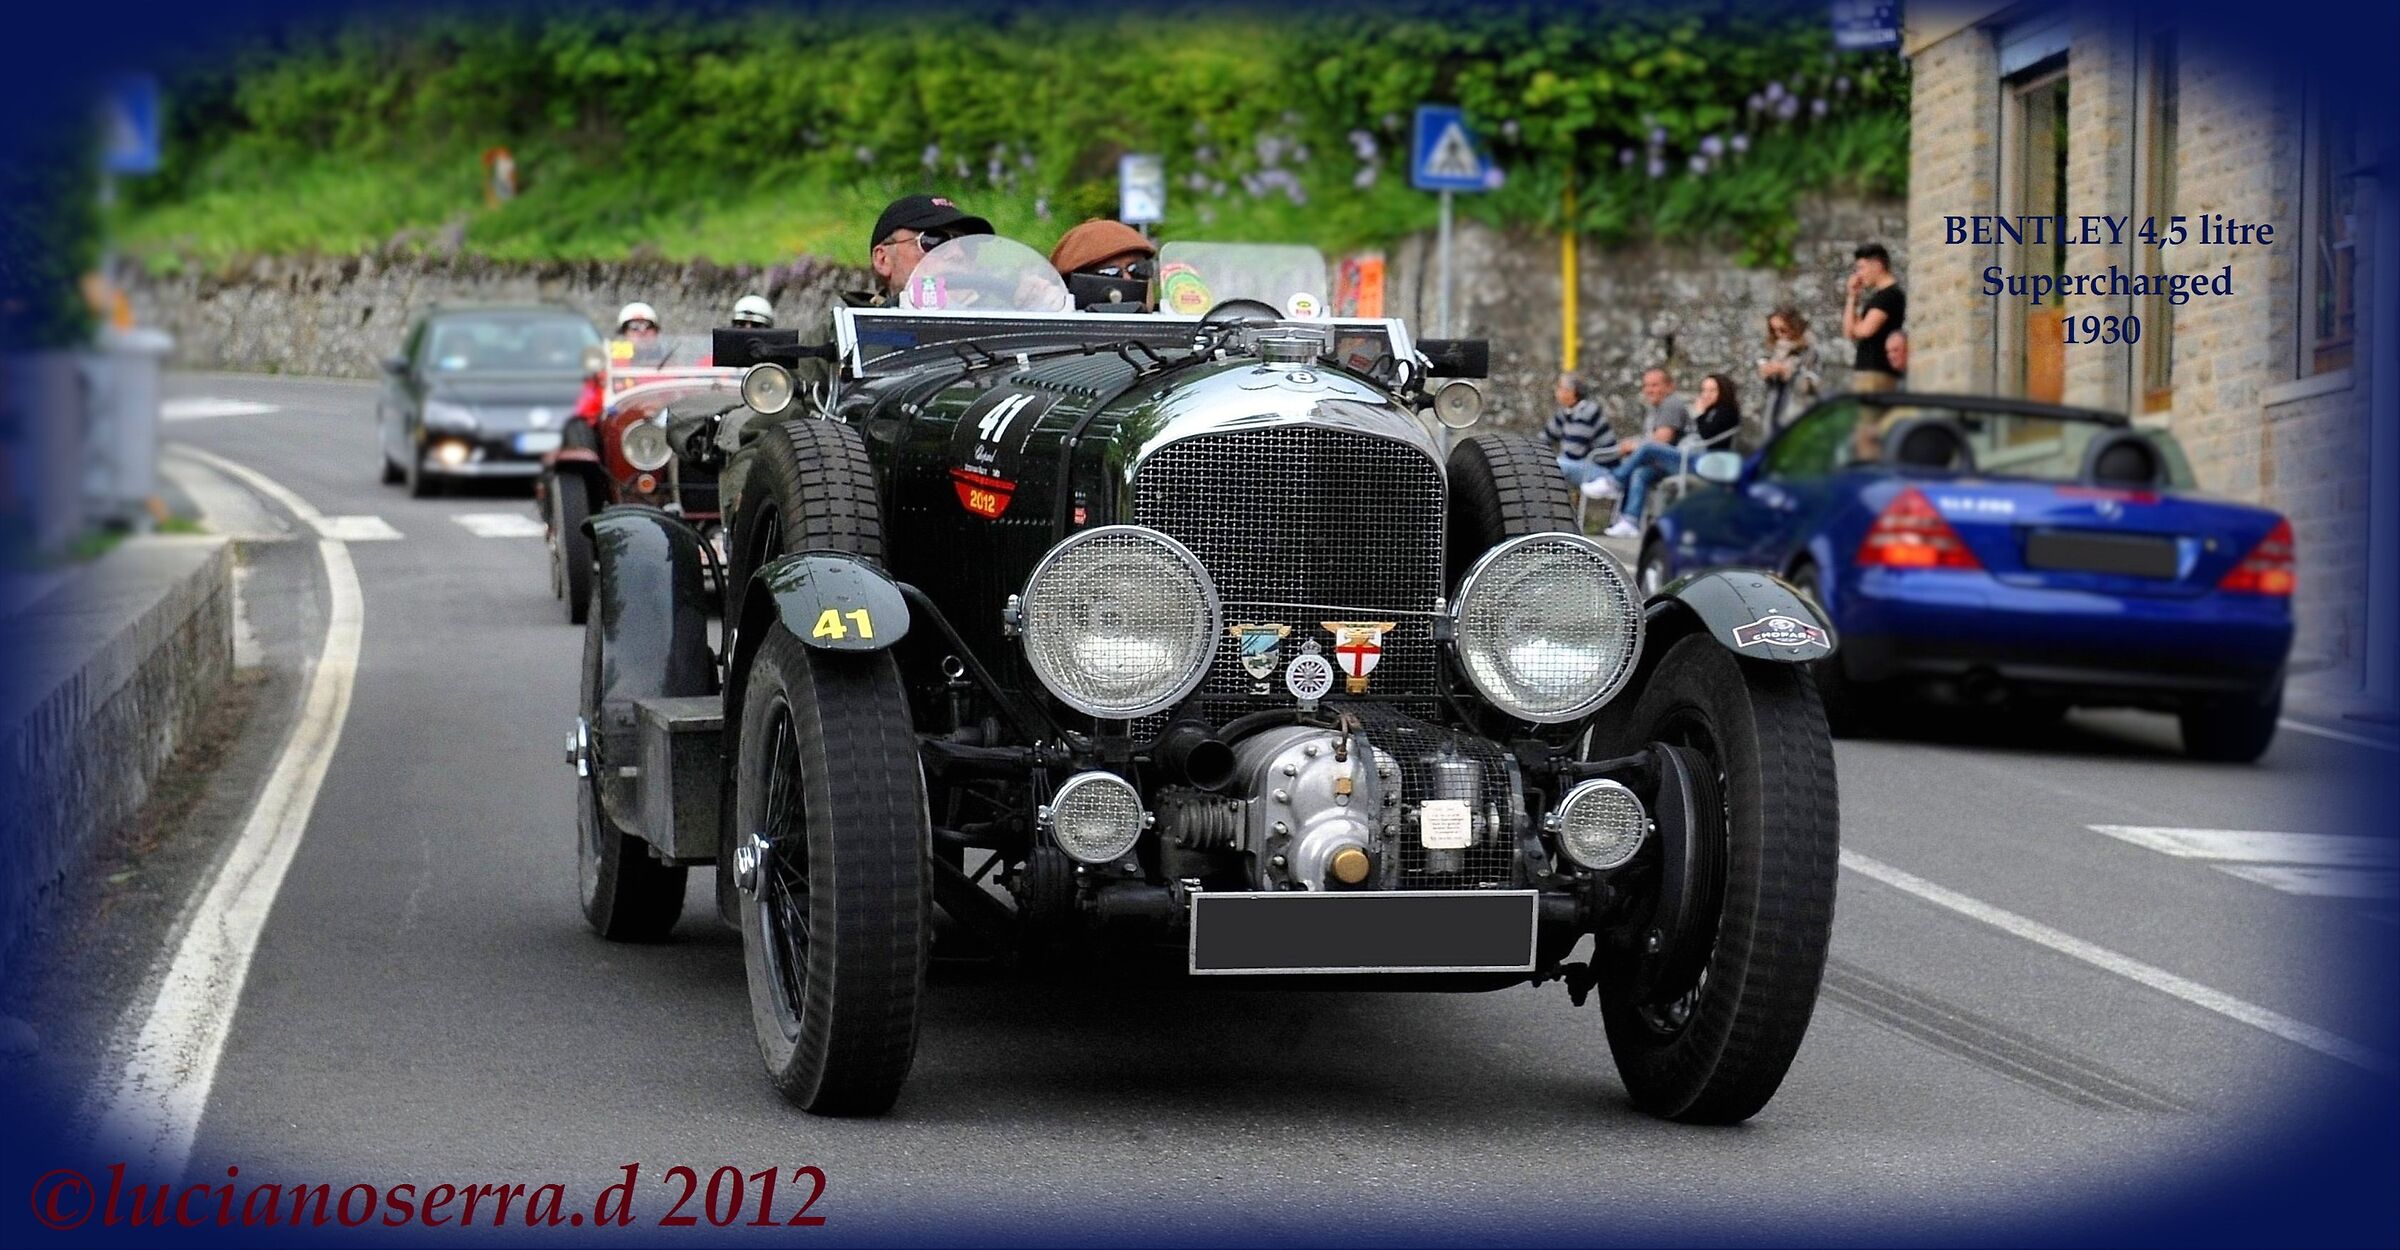 Bentley 4,5 Litri Supercharged - 1930...